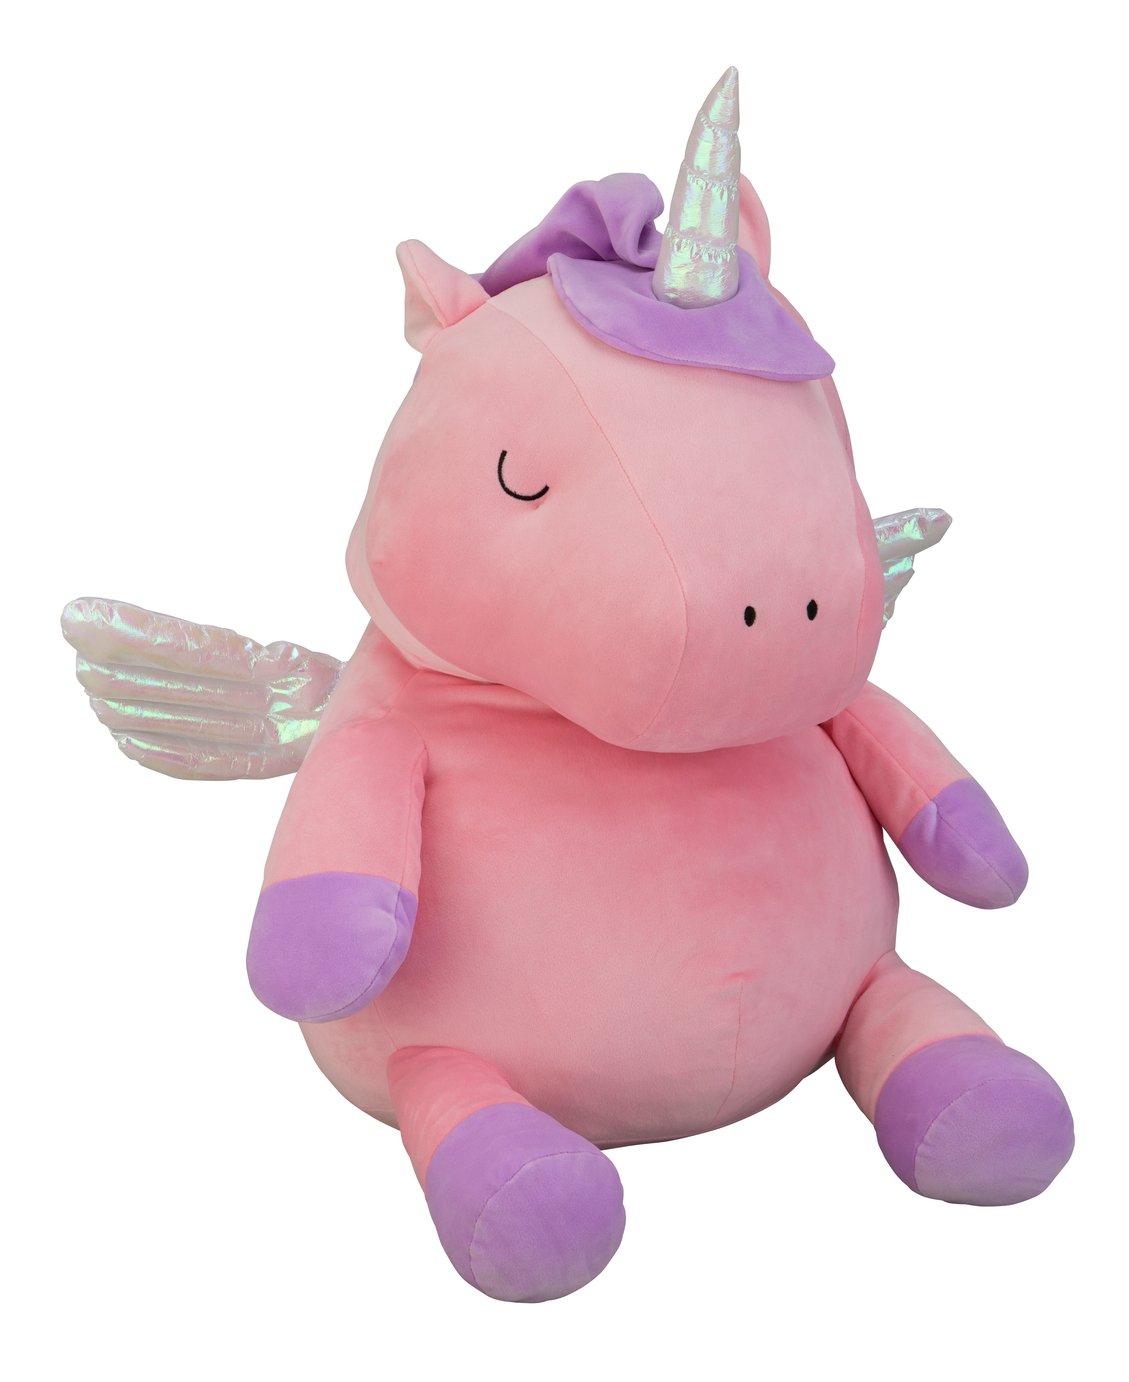 Squishy 22inch Unicorn Soft Toy Review